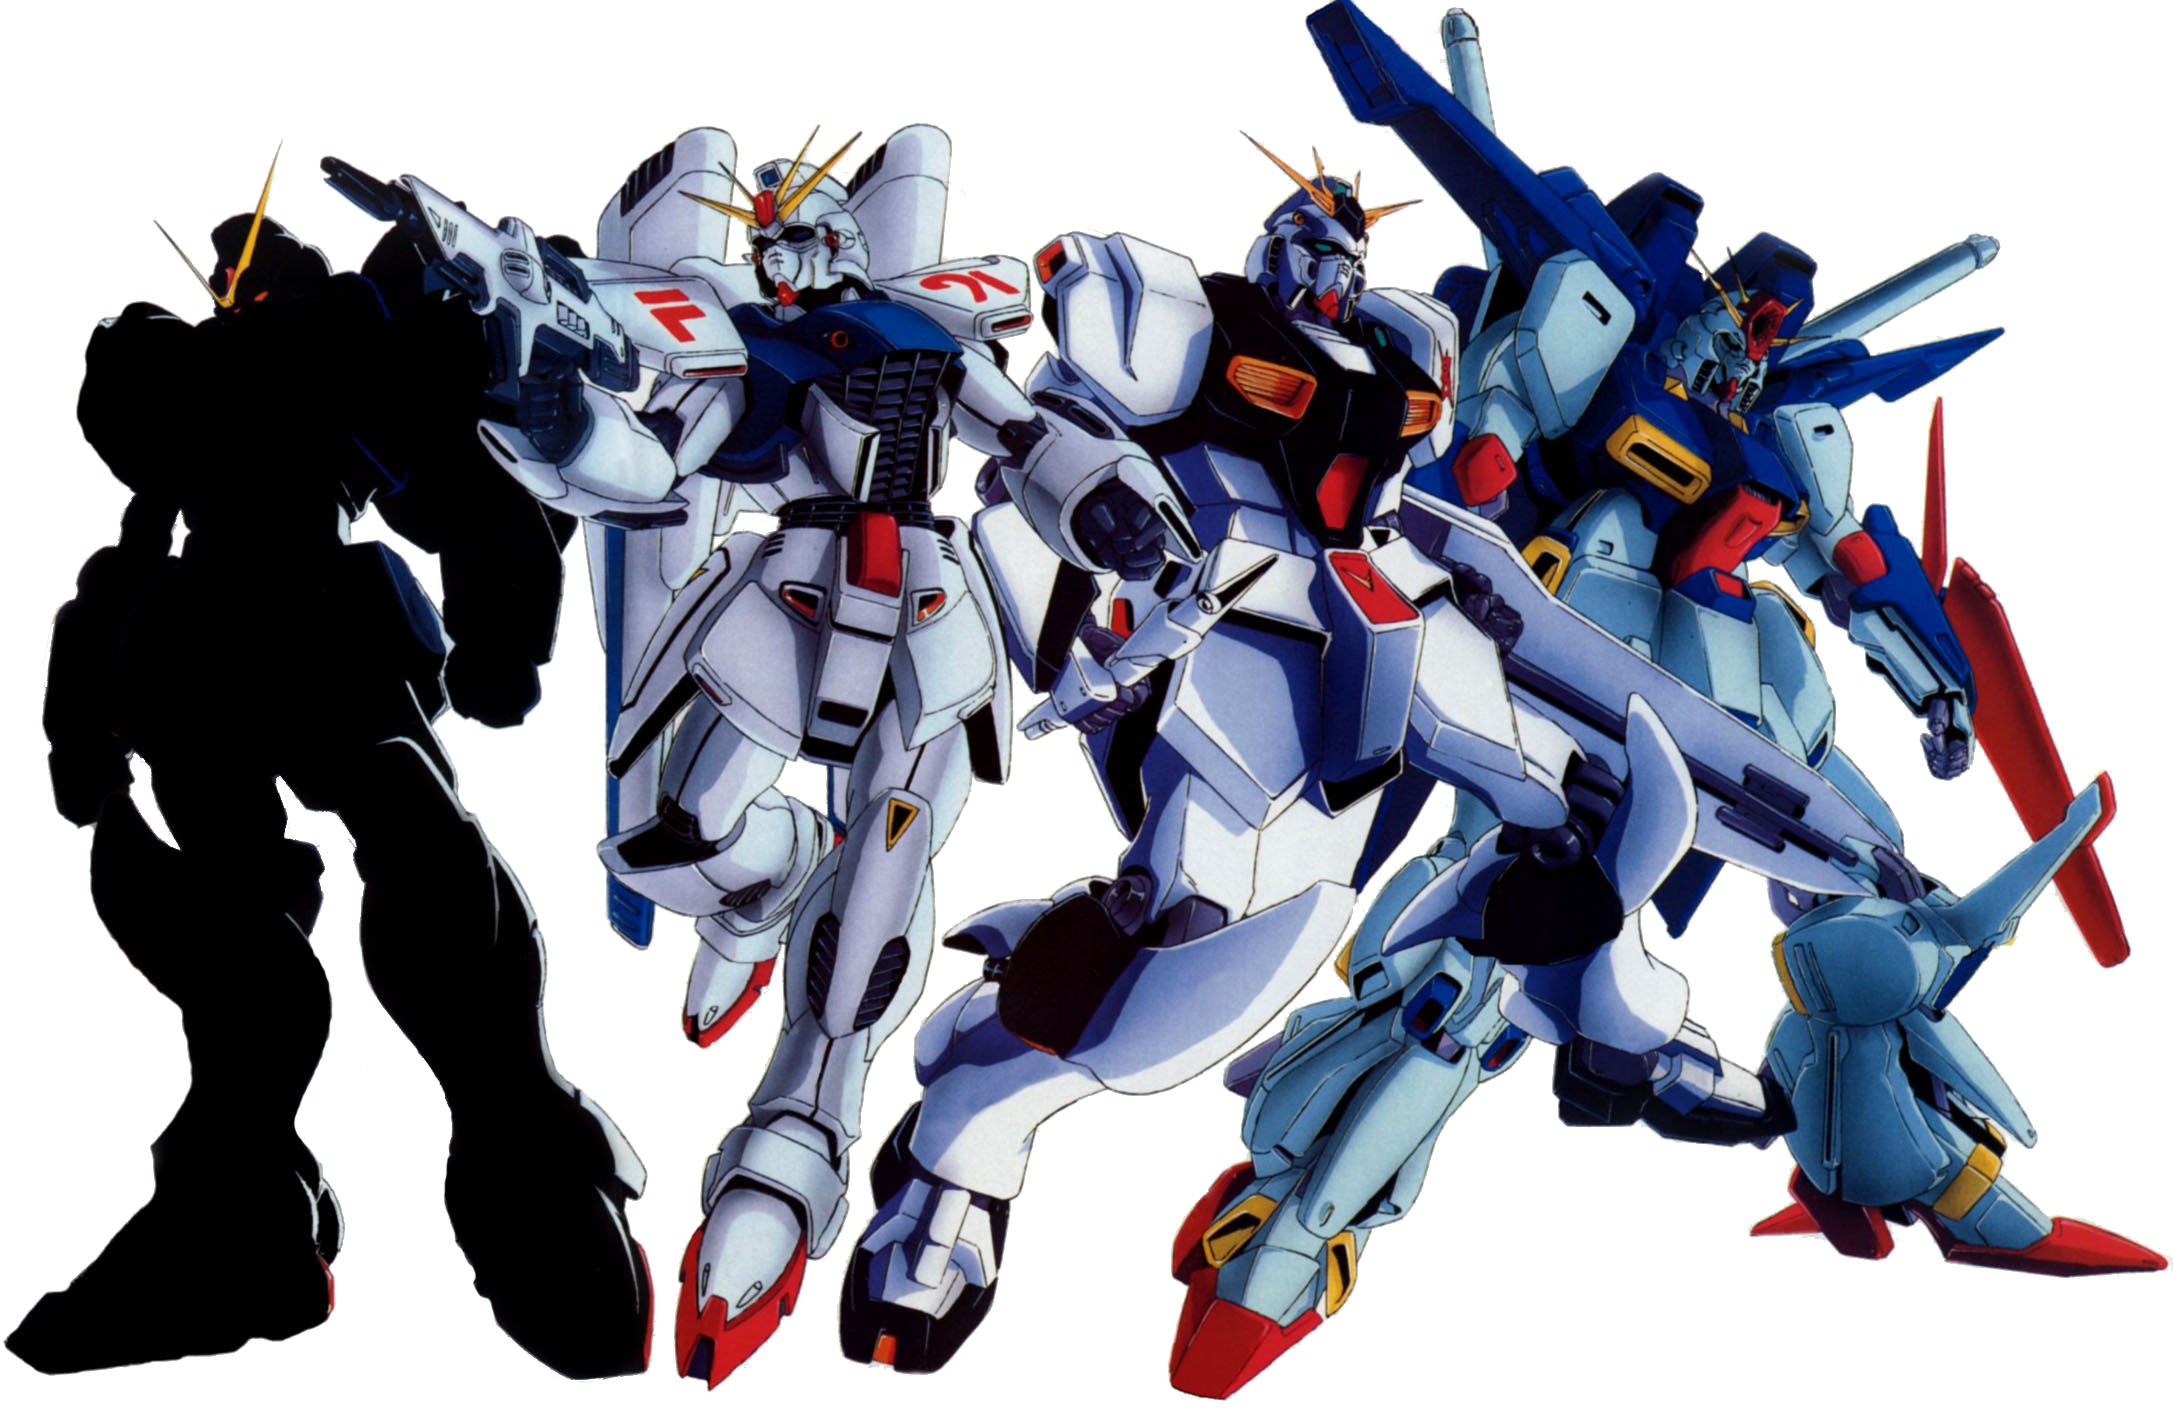 Anime Mobile Suit Gundam Mobile Suit Gundam Zz Nu Gundam Mobile Suit Gundam Chars Counterattack Wallpaper Resolution 2173x1413 Id Wallha Com